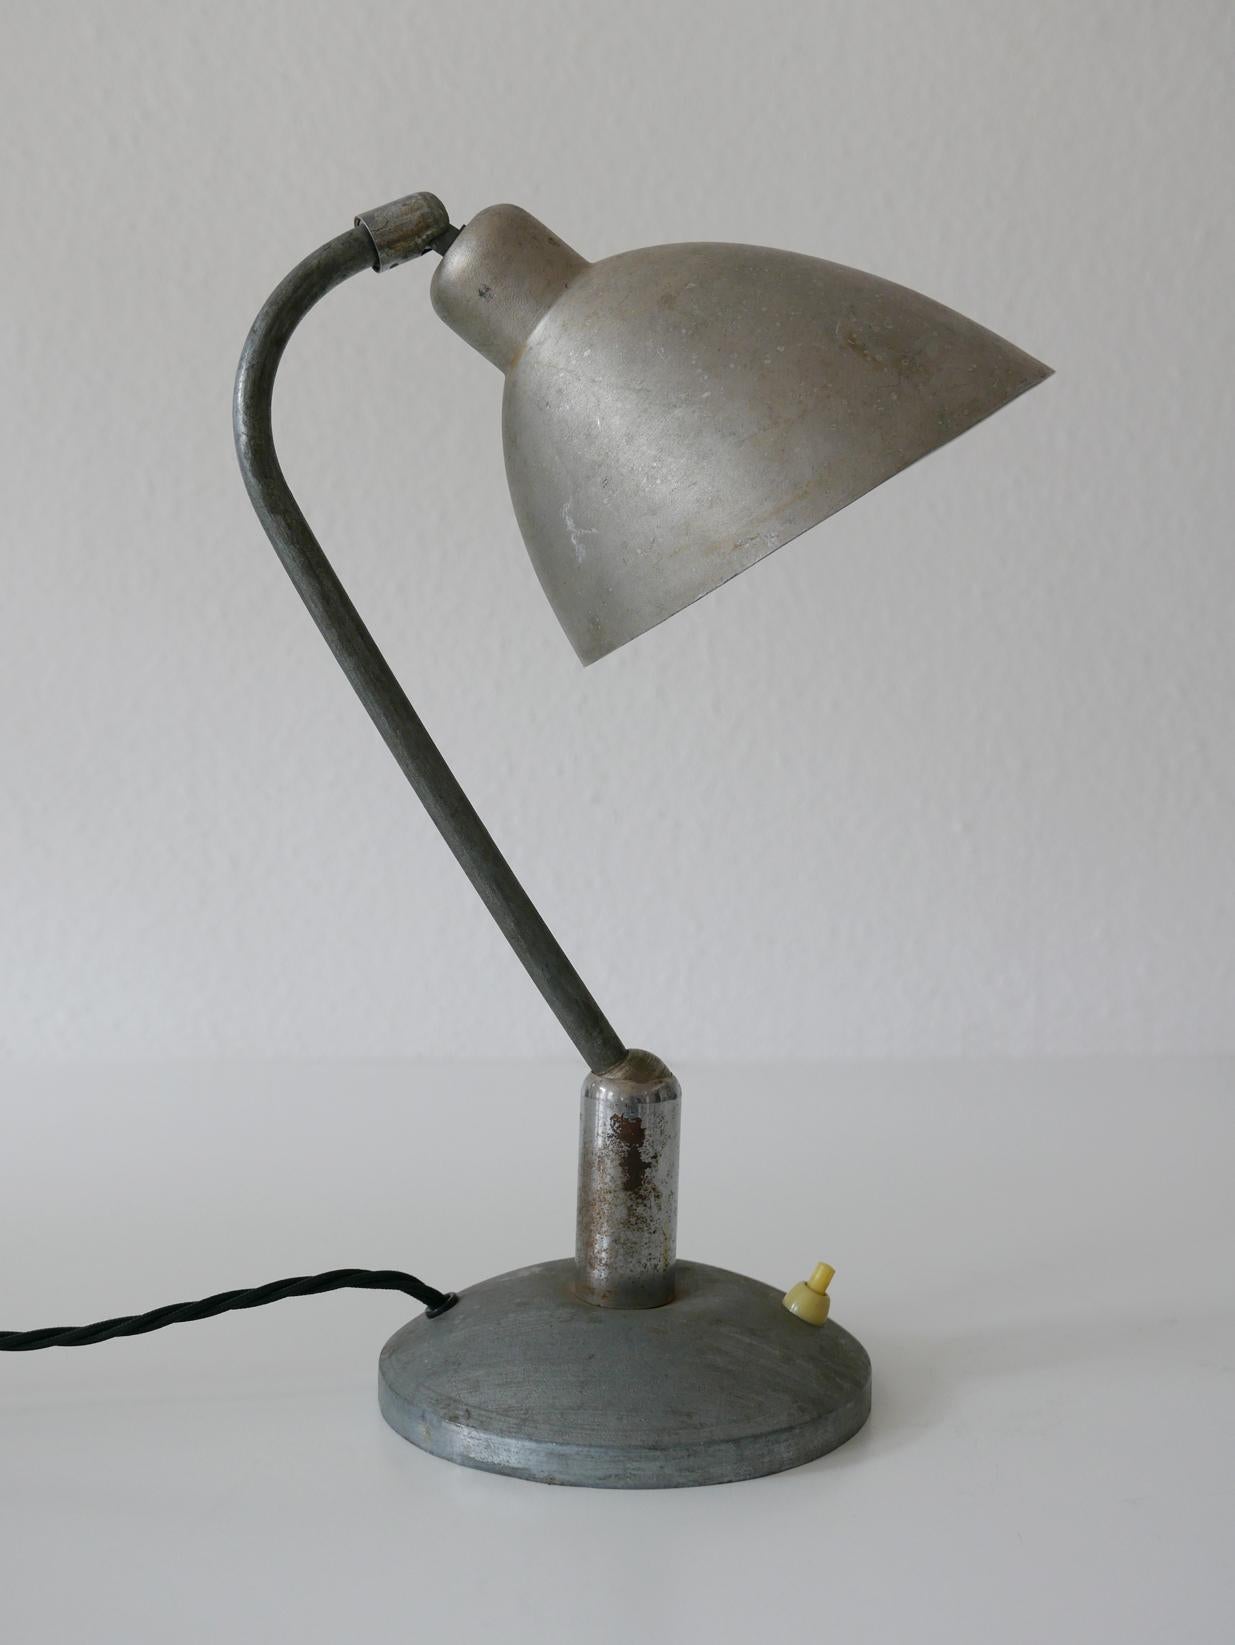 Aluminum Rare Czech Functionalist or Bauhaus Table Lamp by Franta ‘Frantisek’ Anyz, 1920s For Sale